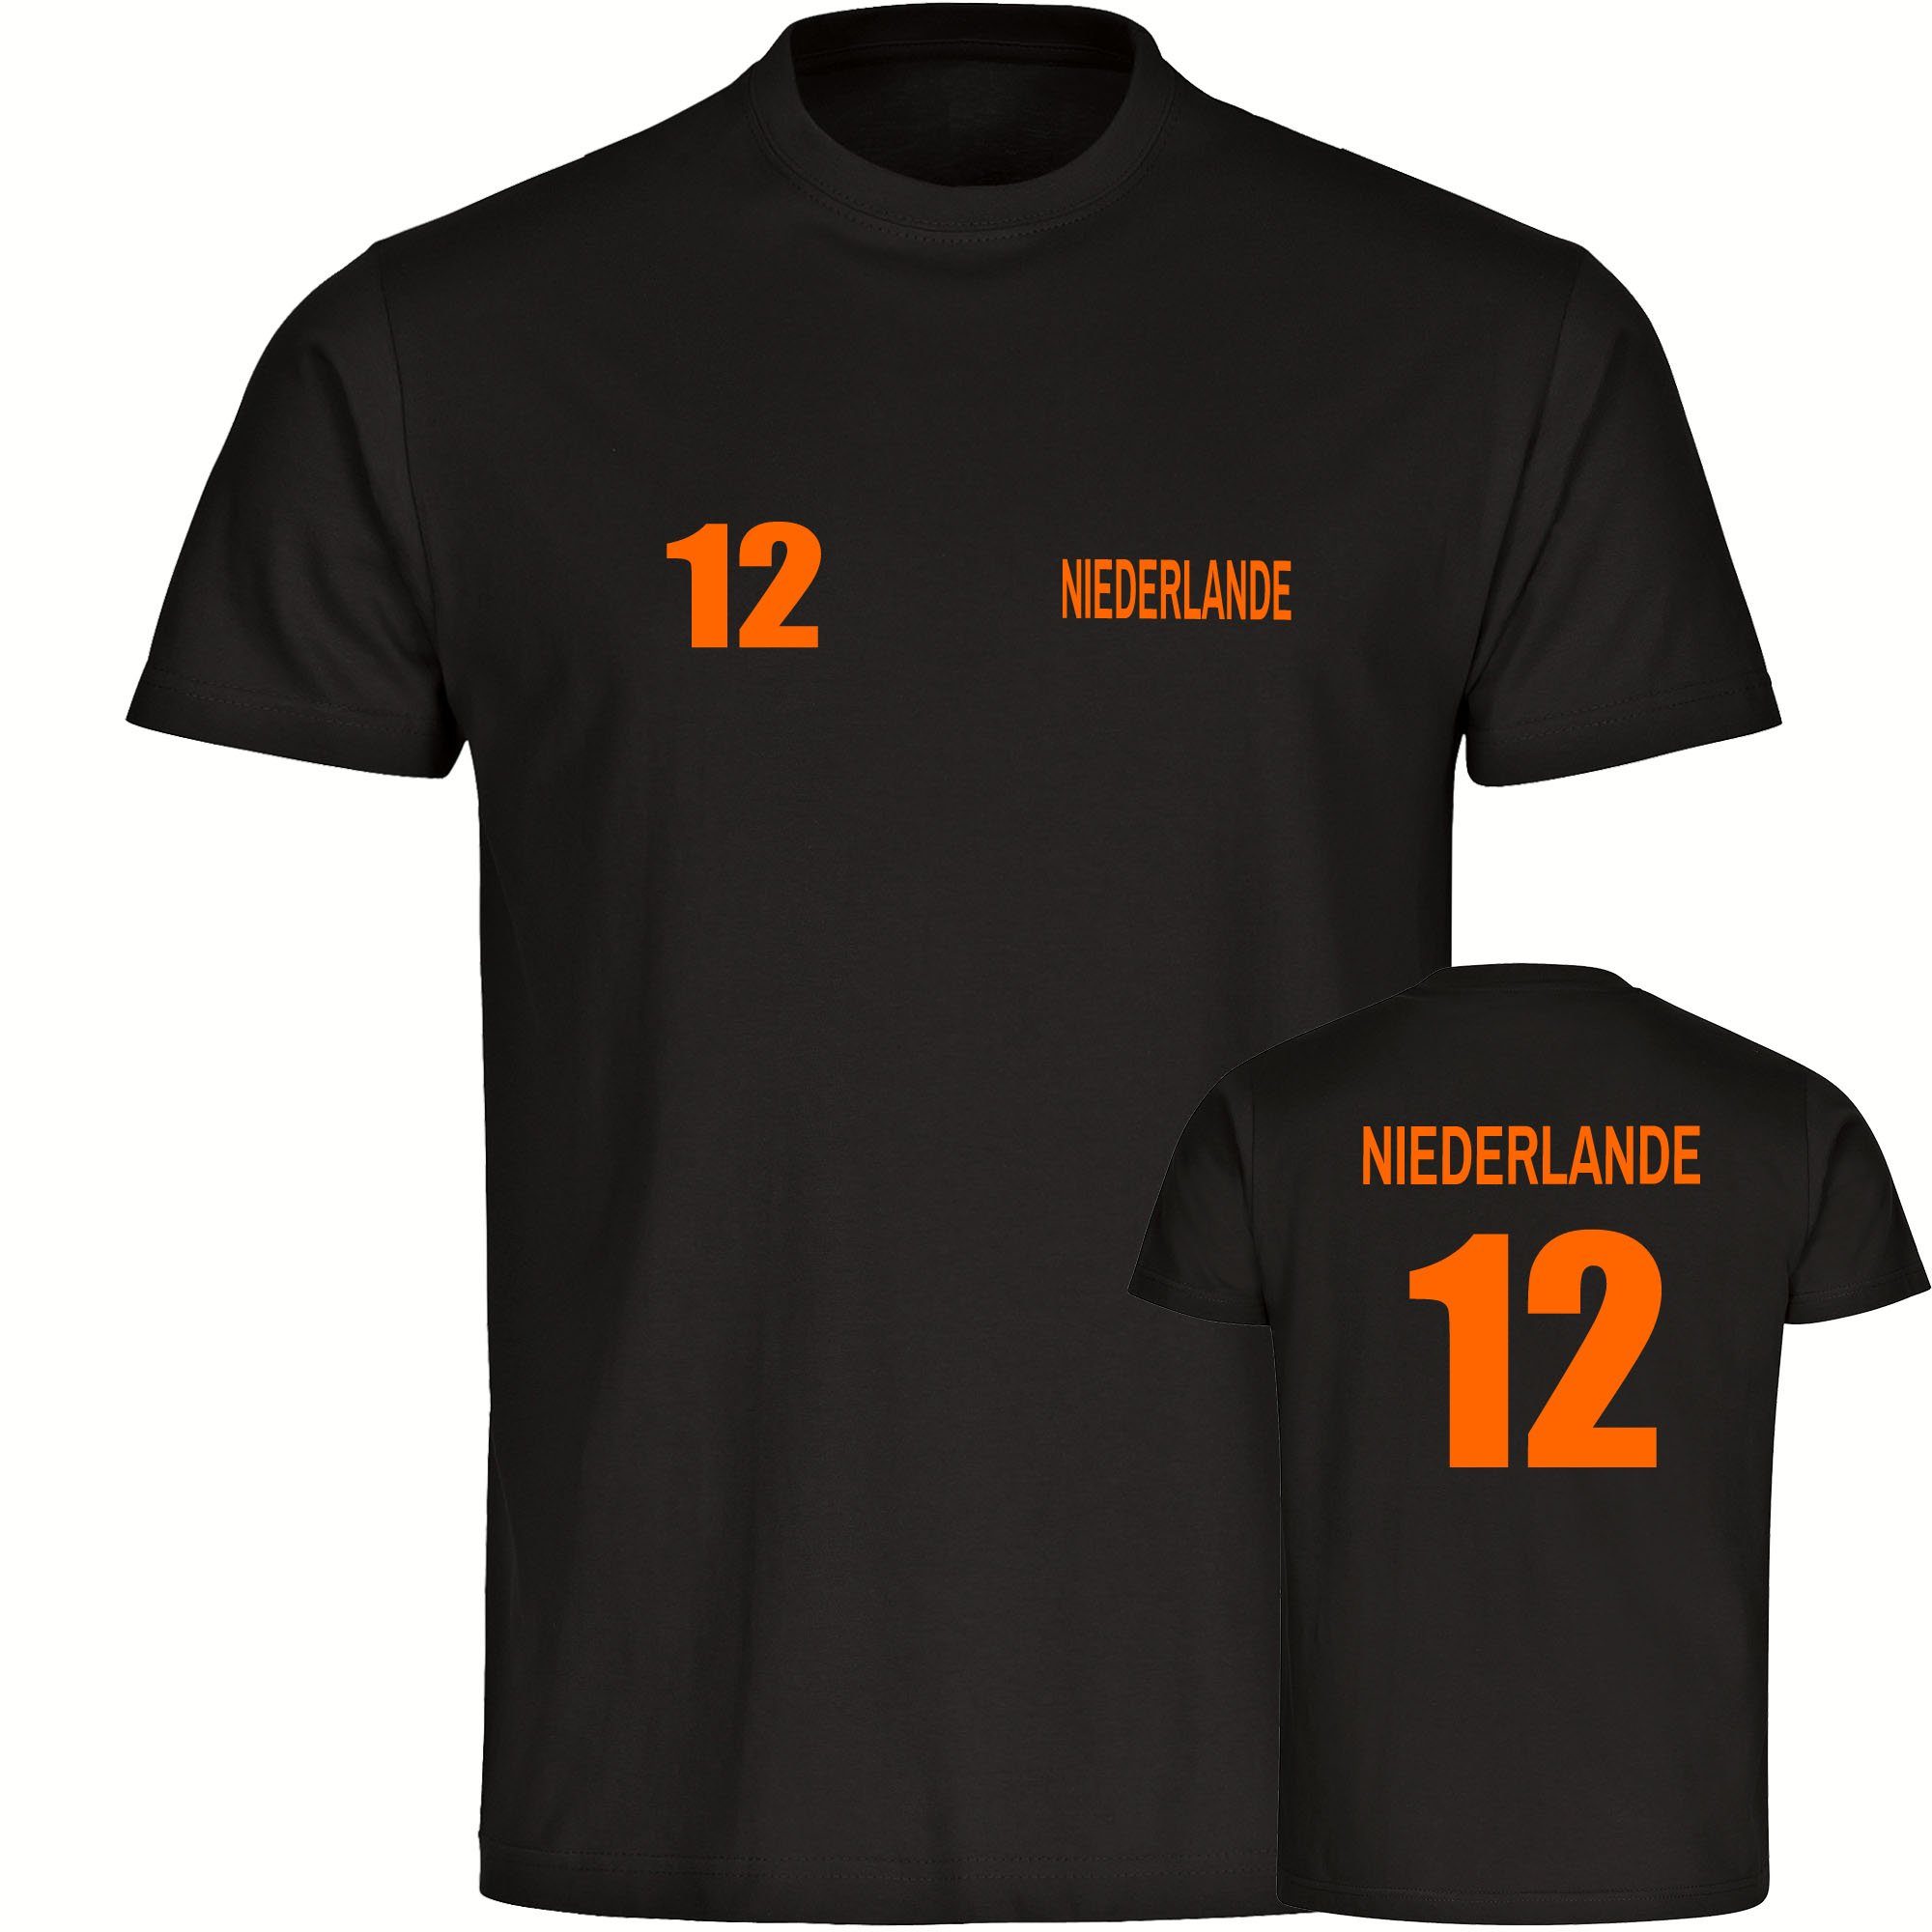 multifanshop T-Shirt Herren Niederlande - Trikot 12 - Männer